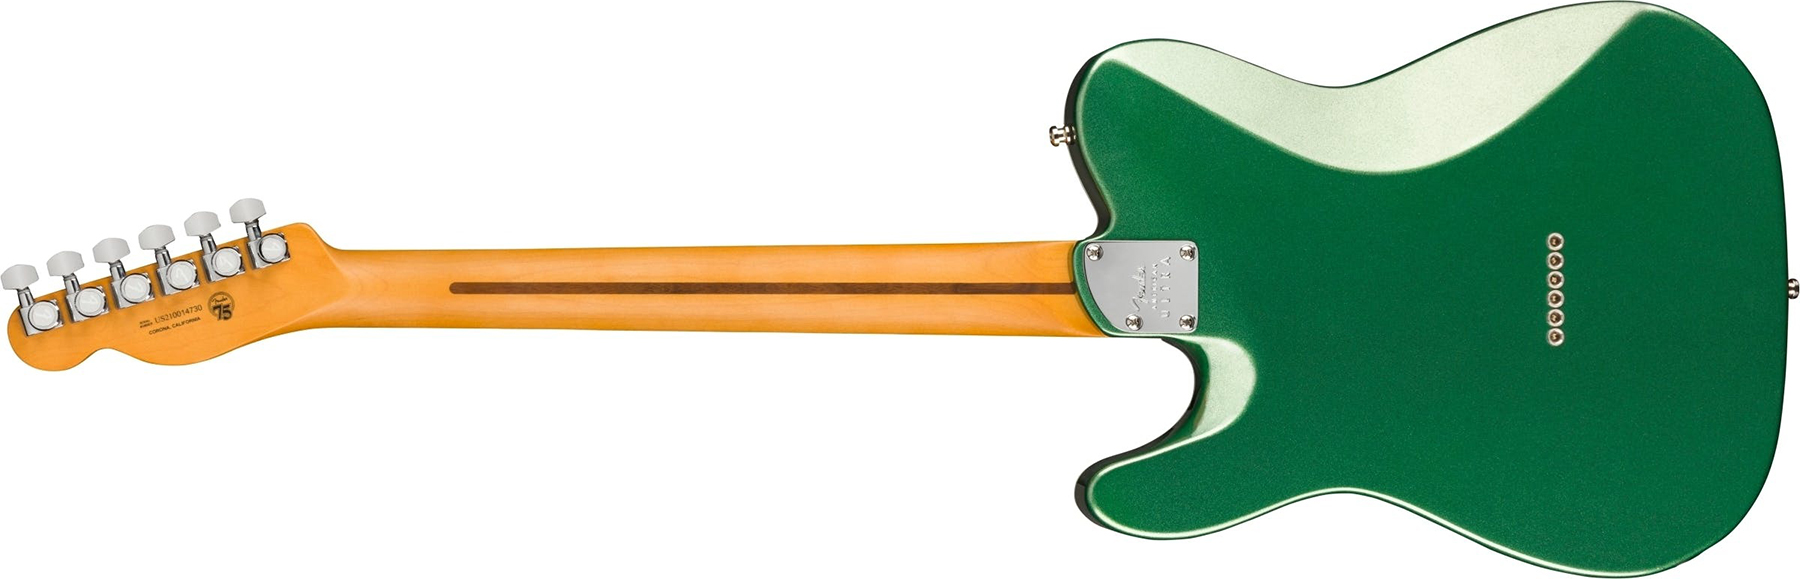 Fender Tele American Ultra Fsr Ltd Usa 2s Ht Eb - Mystic Pine Green - E-Gitarre in Teleform - Variation 1